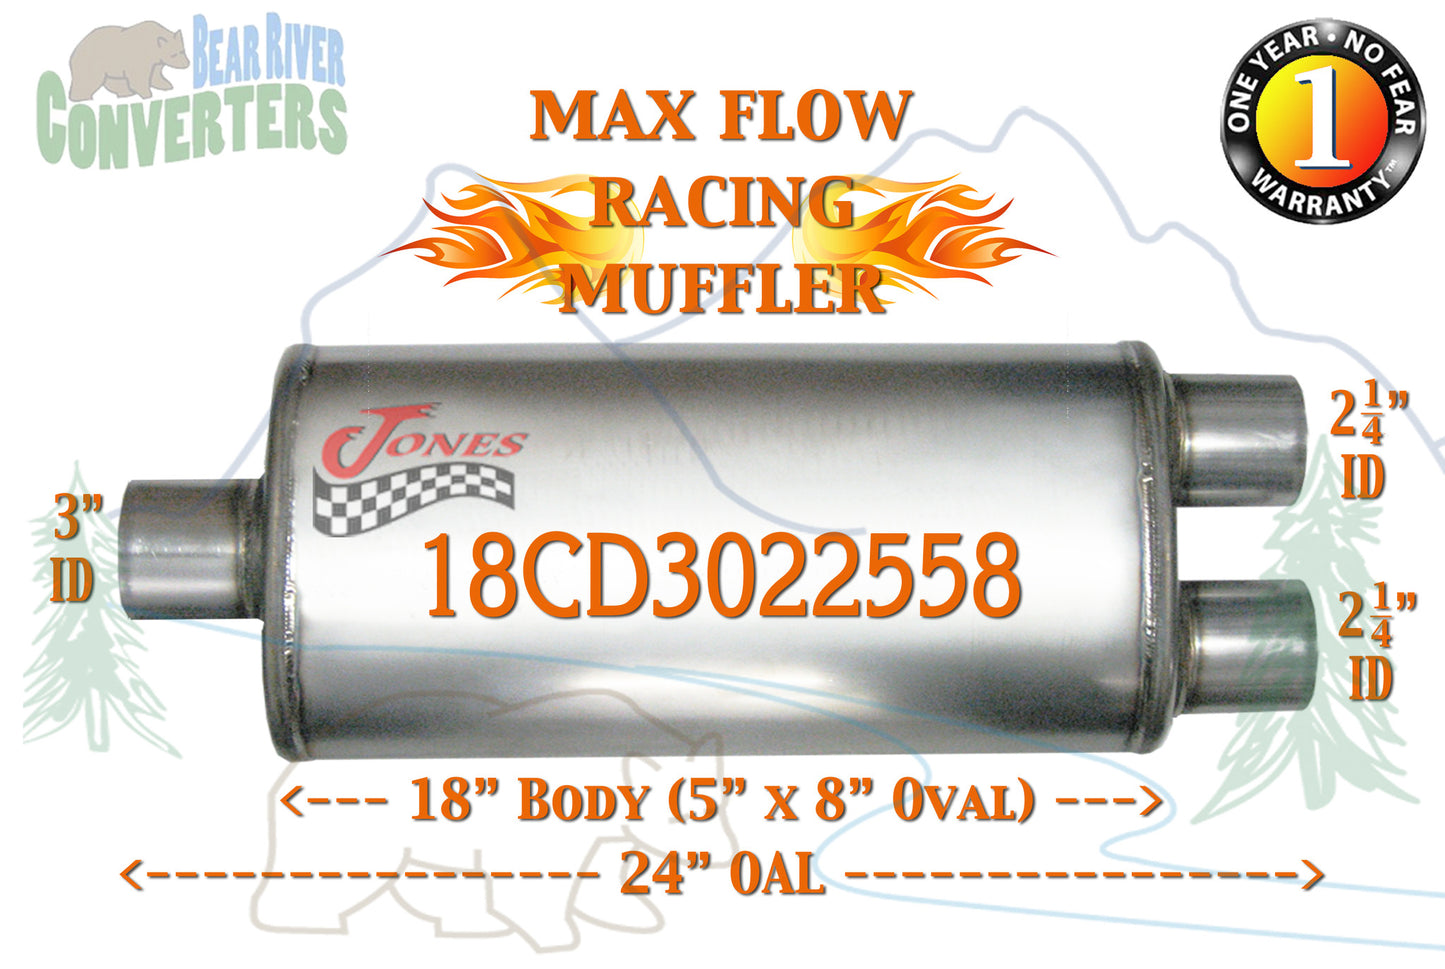 18CD3022558 Jones MF2278 Max Flow Racing Muffler 18” Oval Body 3” Center/ 2 1/4” Dual Pipe 24” OAL - Bear River Converters